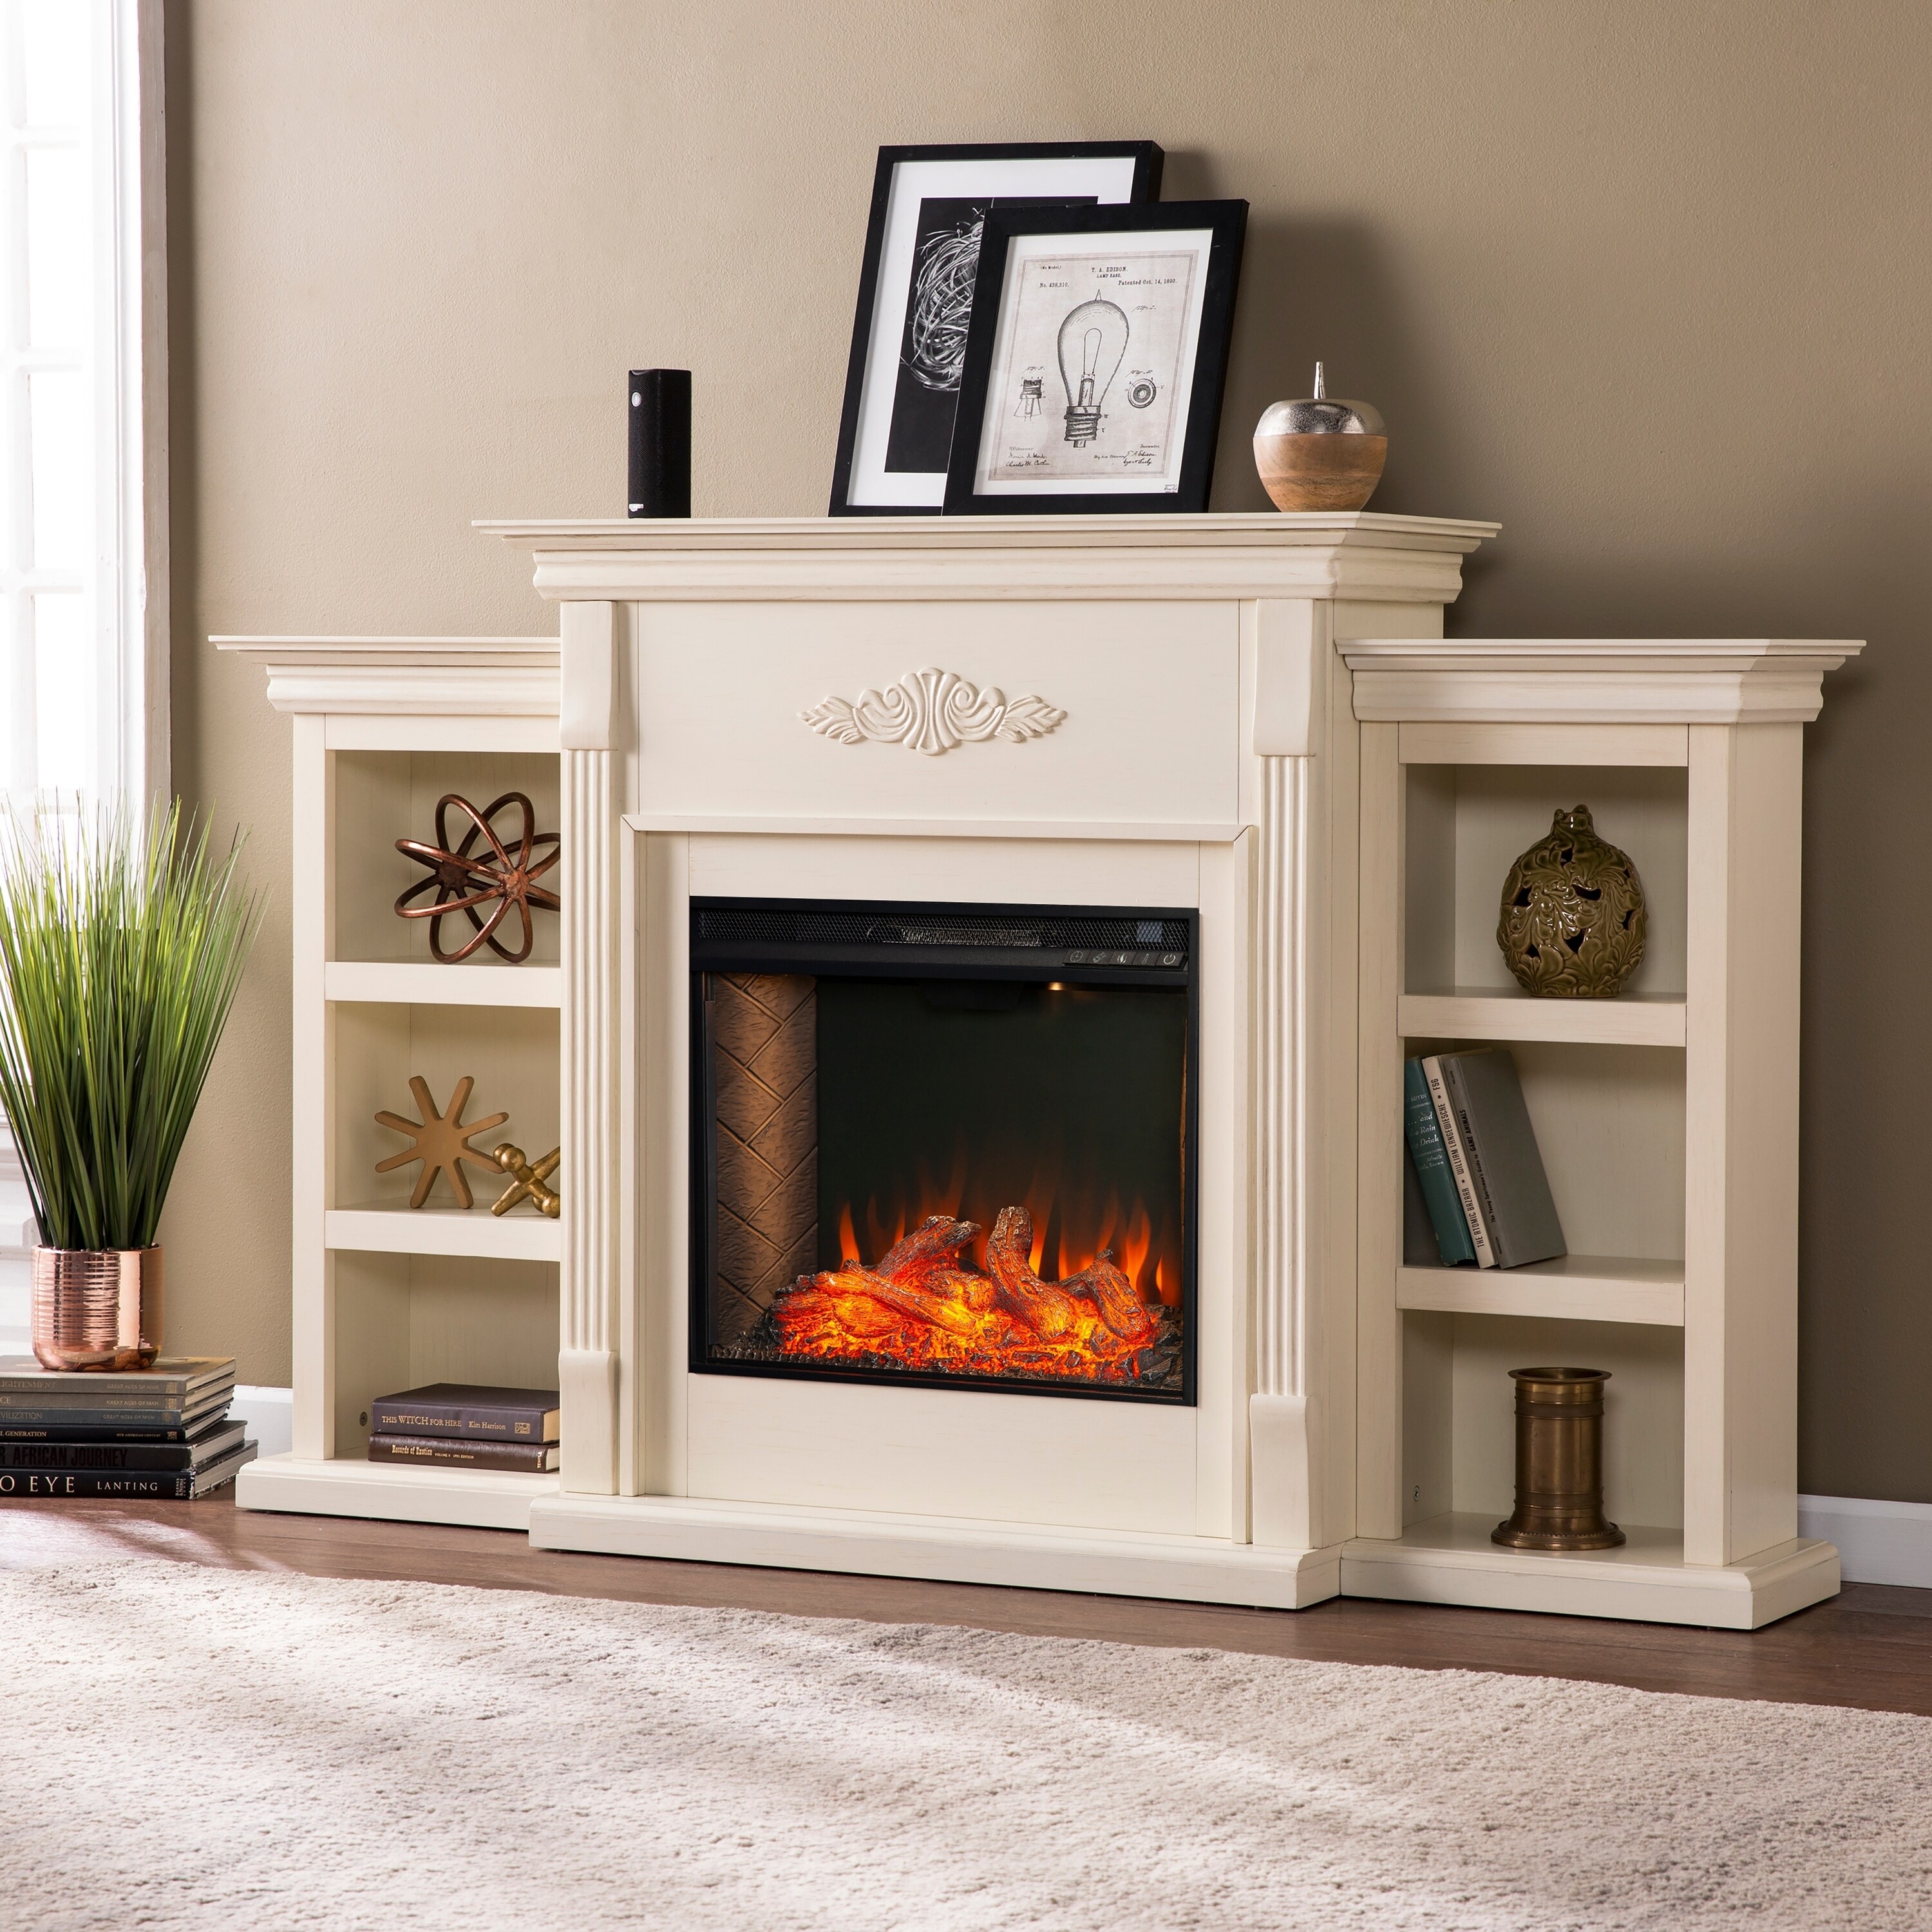 SEI Furniture Talini Brown 6-shelf Alexa-enabled Smart Fireplace